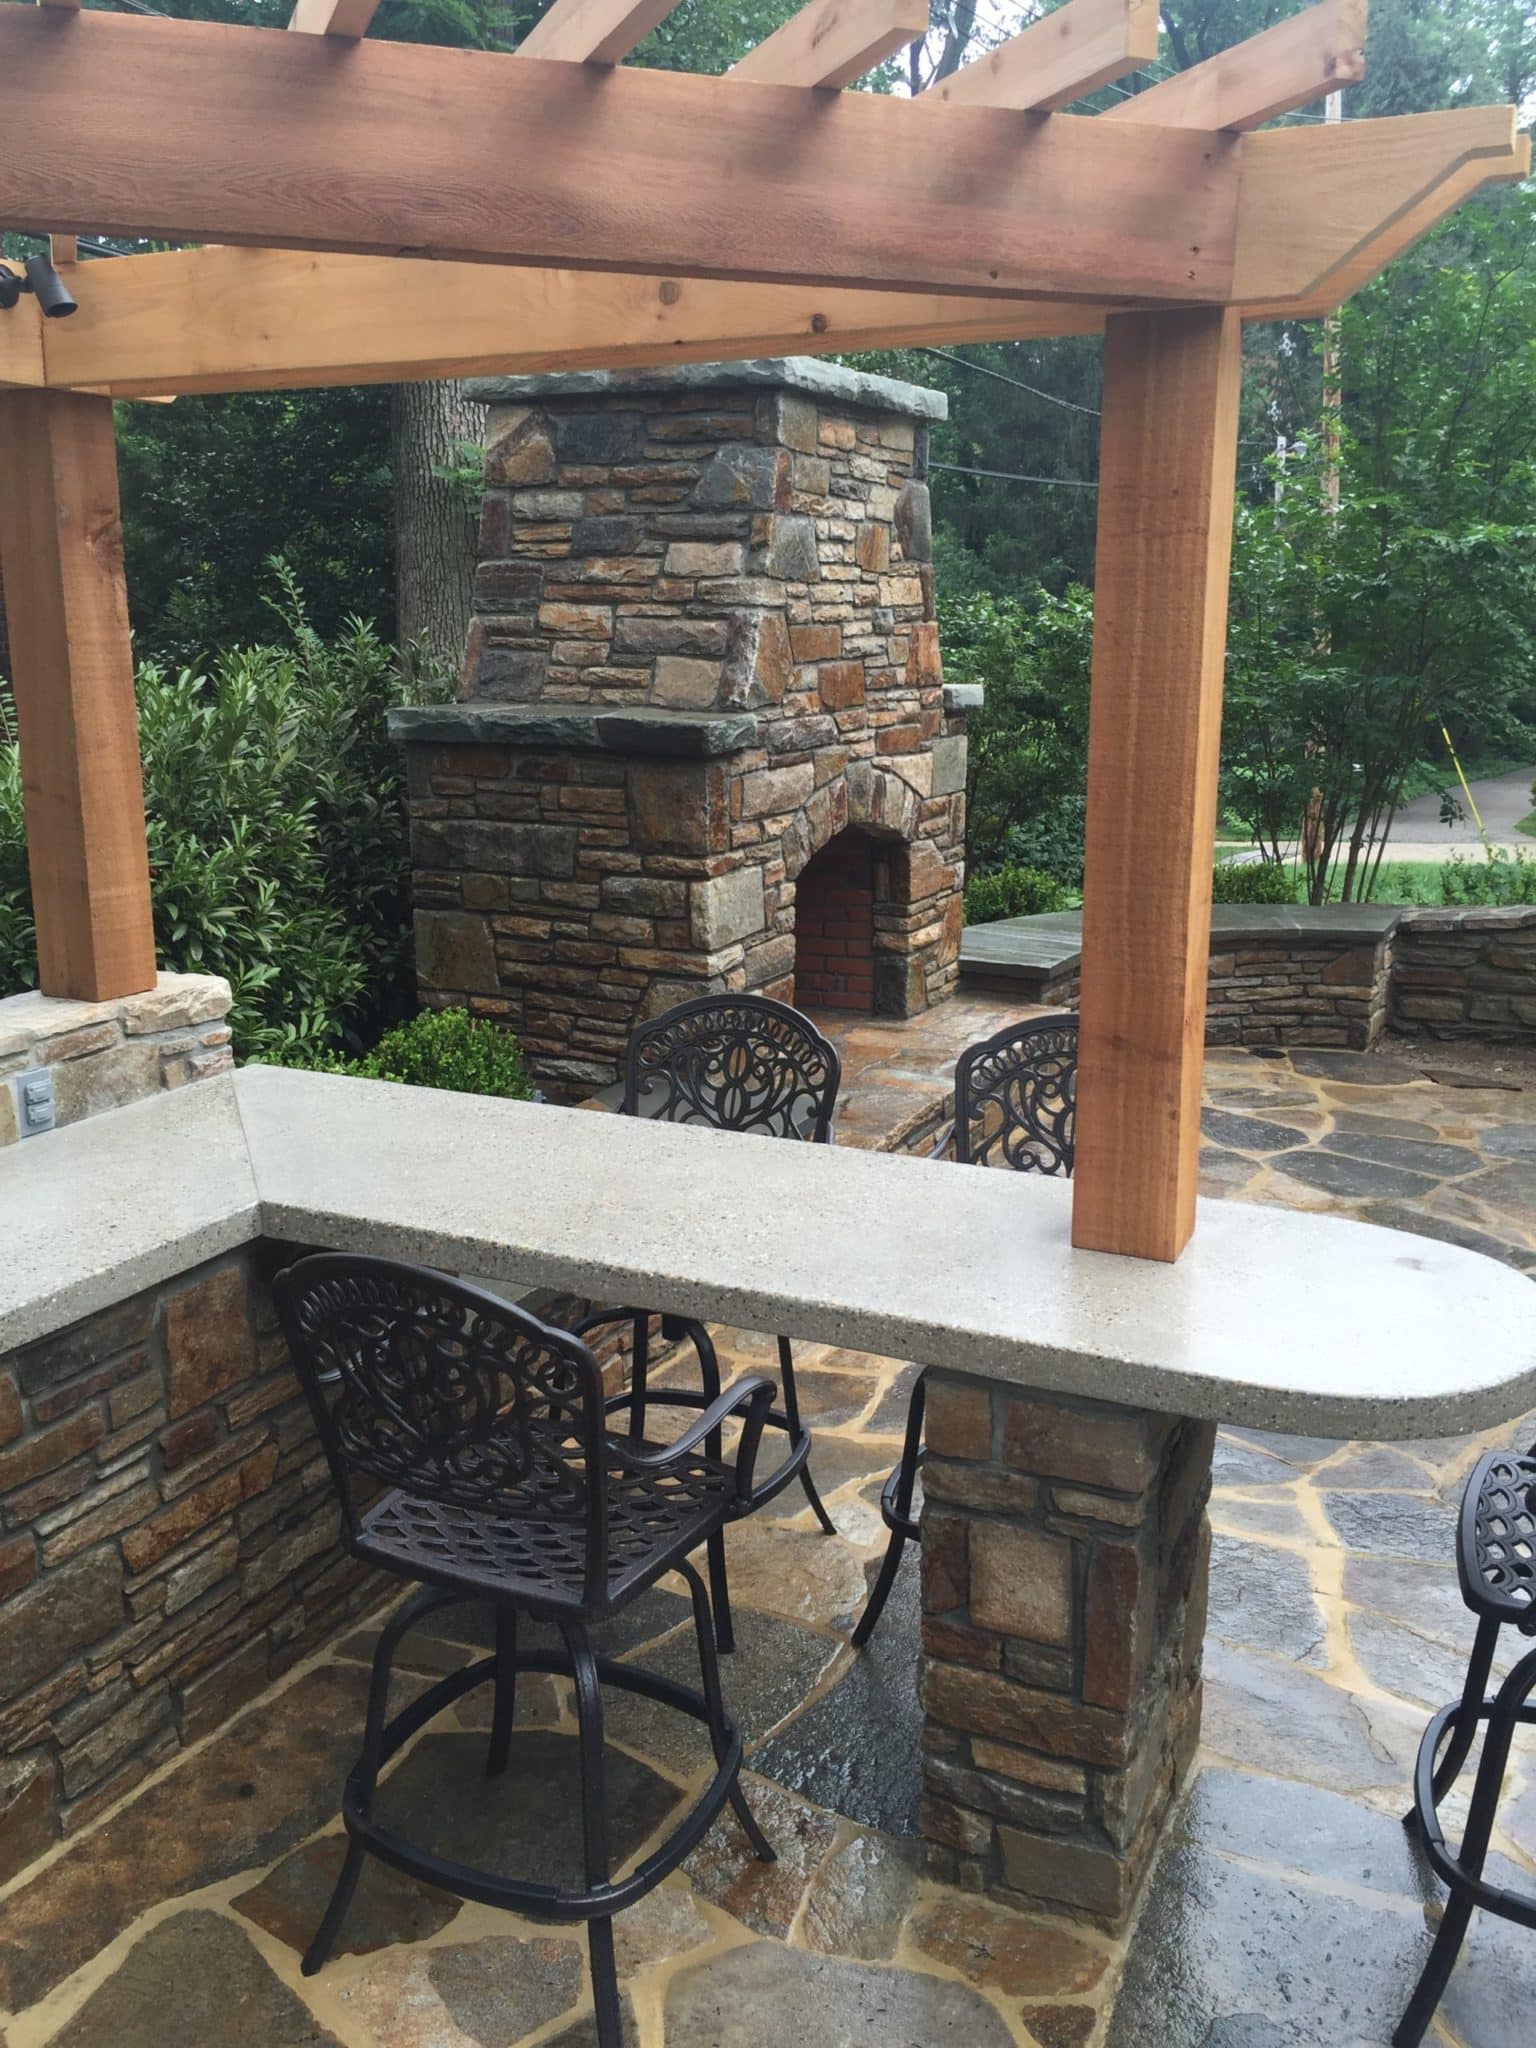 395 Outdoor Kitchen with Concrete Countertop and Cedar Pergola